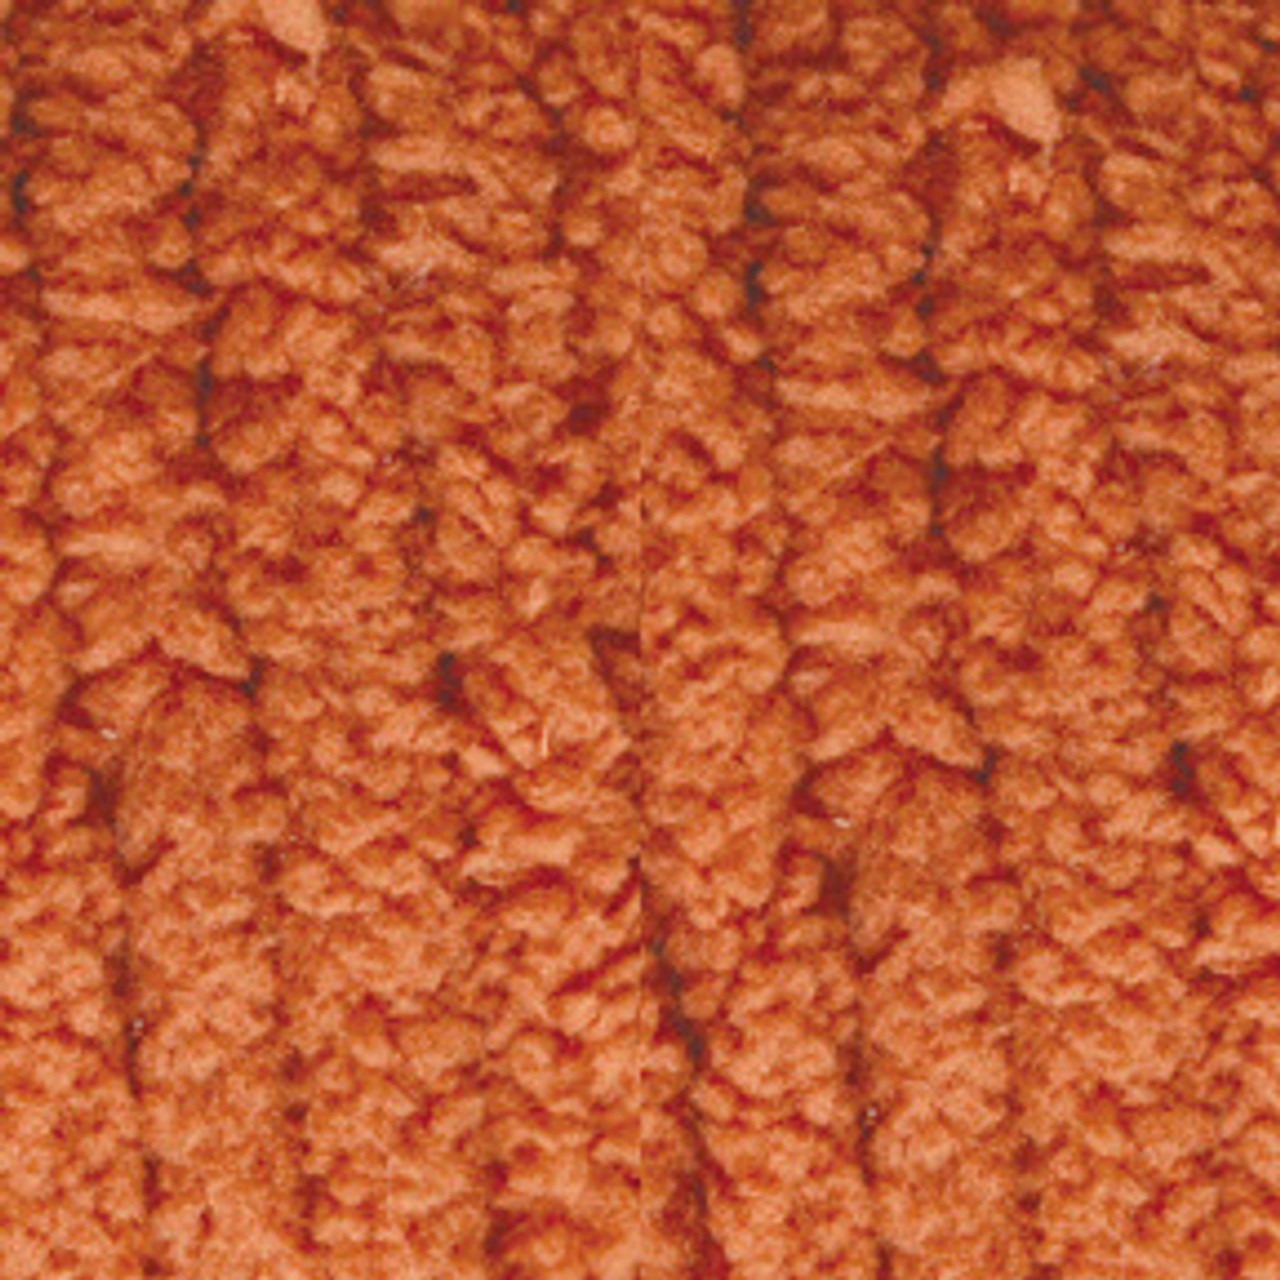 Spinrite Bernat Blanket Yarn, Pumpkin Spice